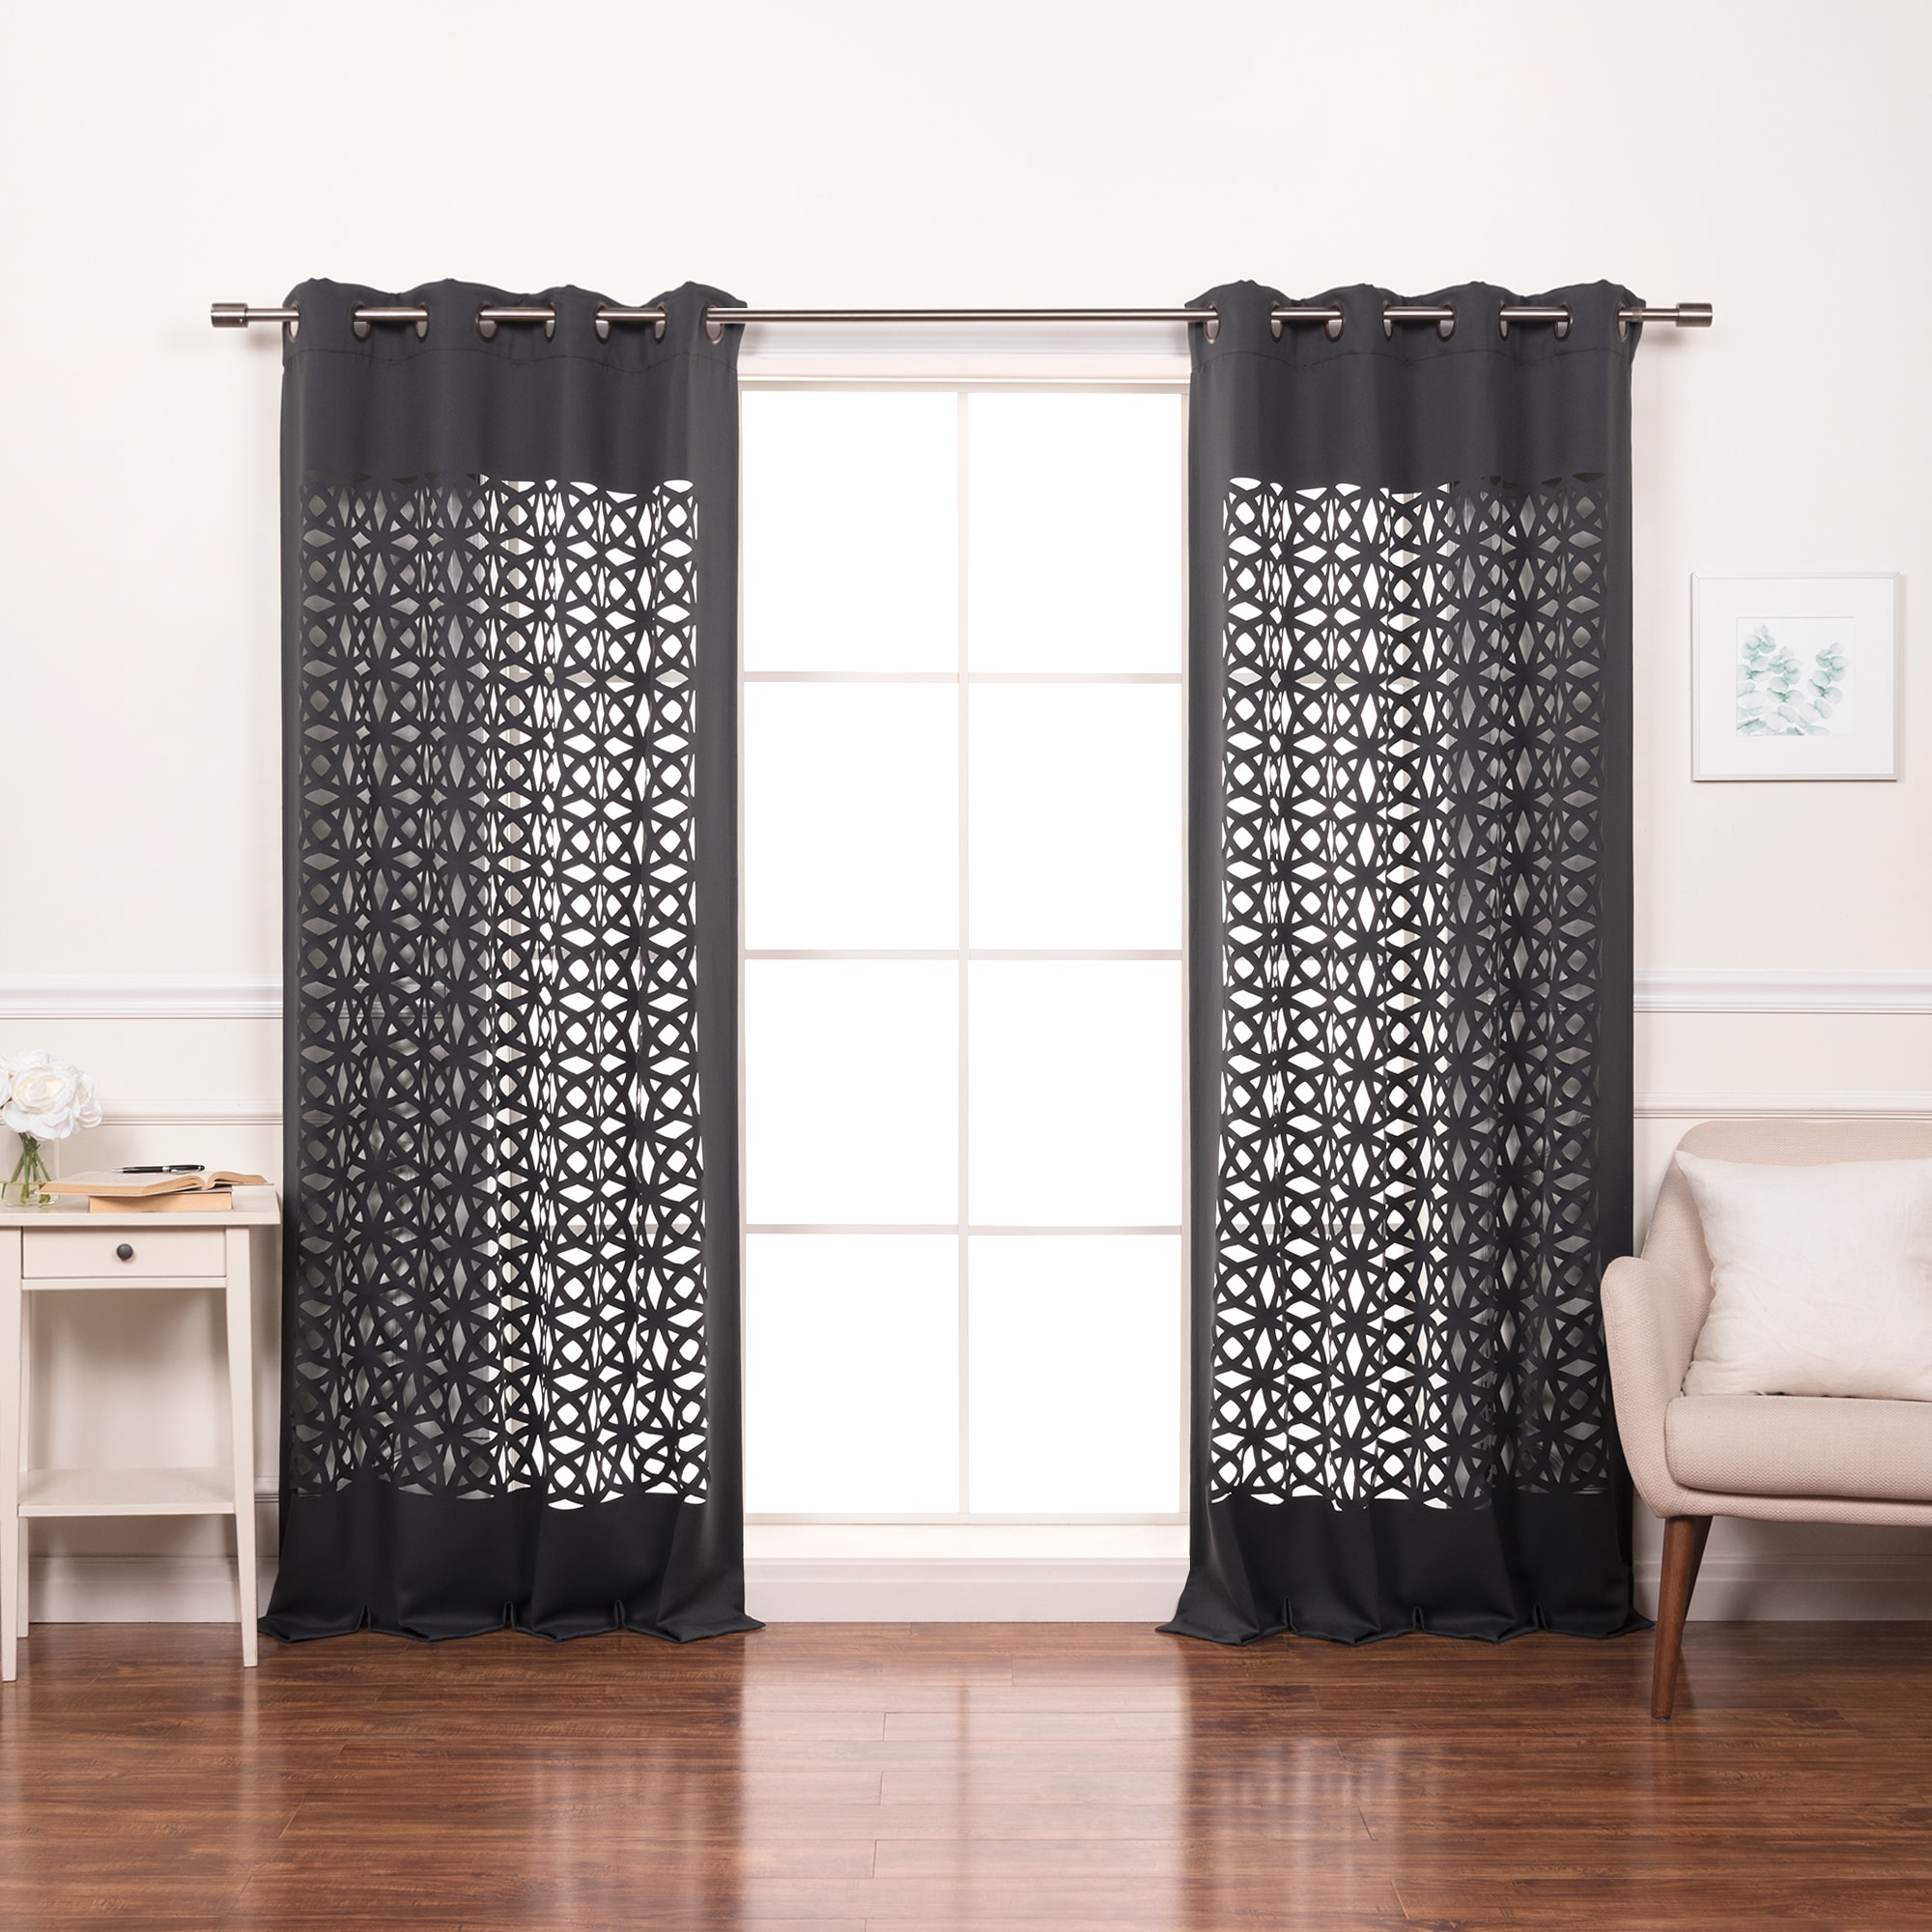 Set 2 Black White Geometric Trellis Curtains Panels Drapes 84 inch L Darkening 